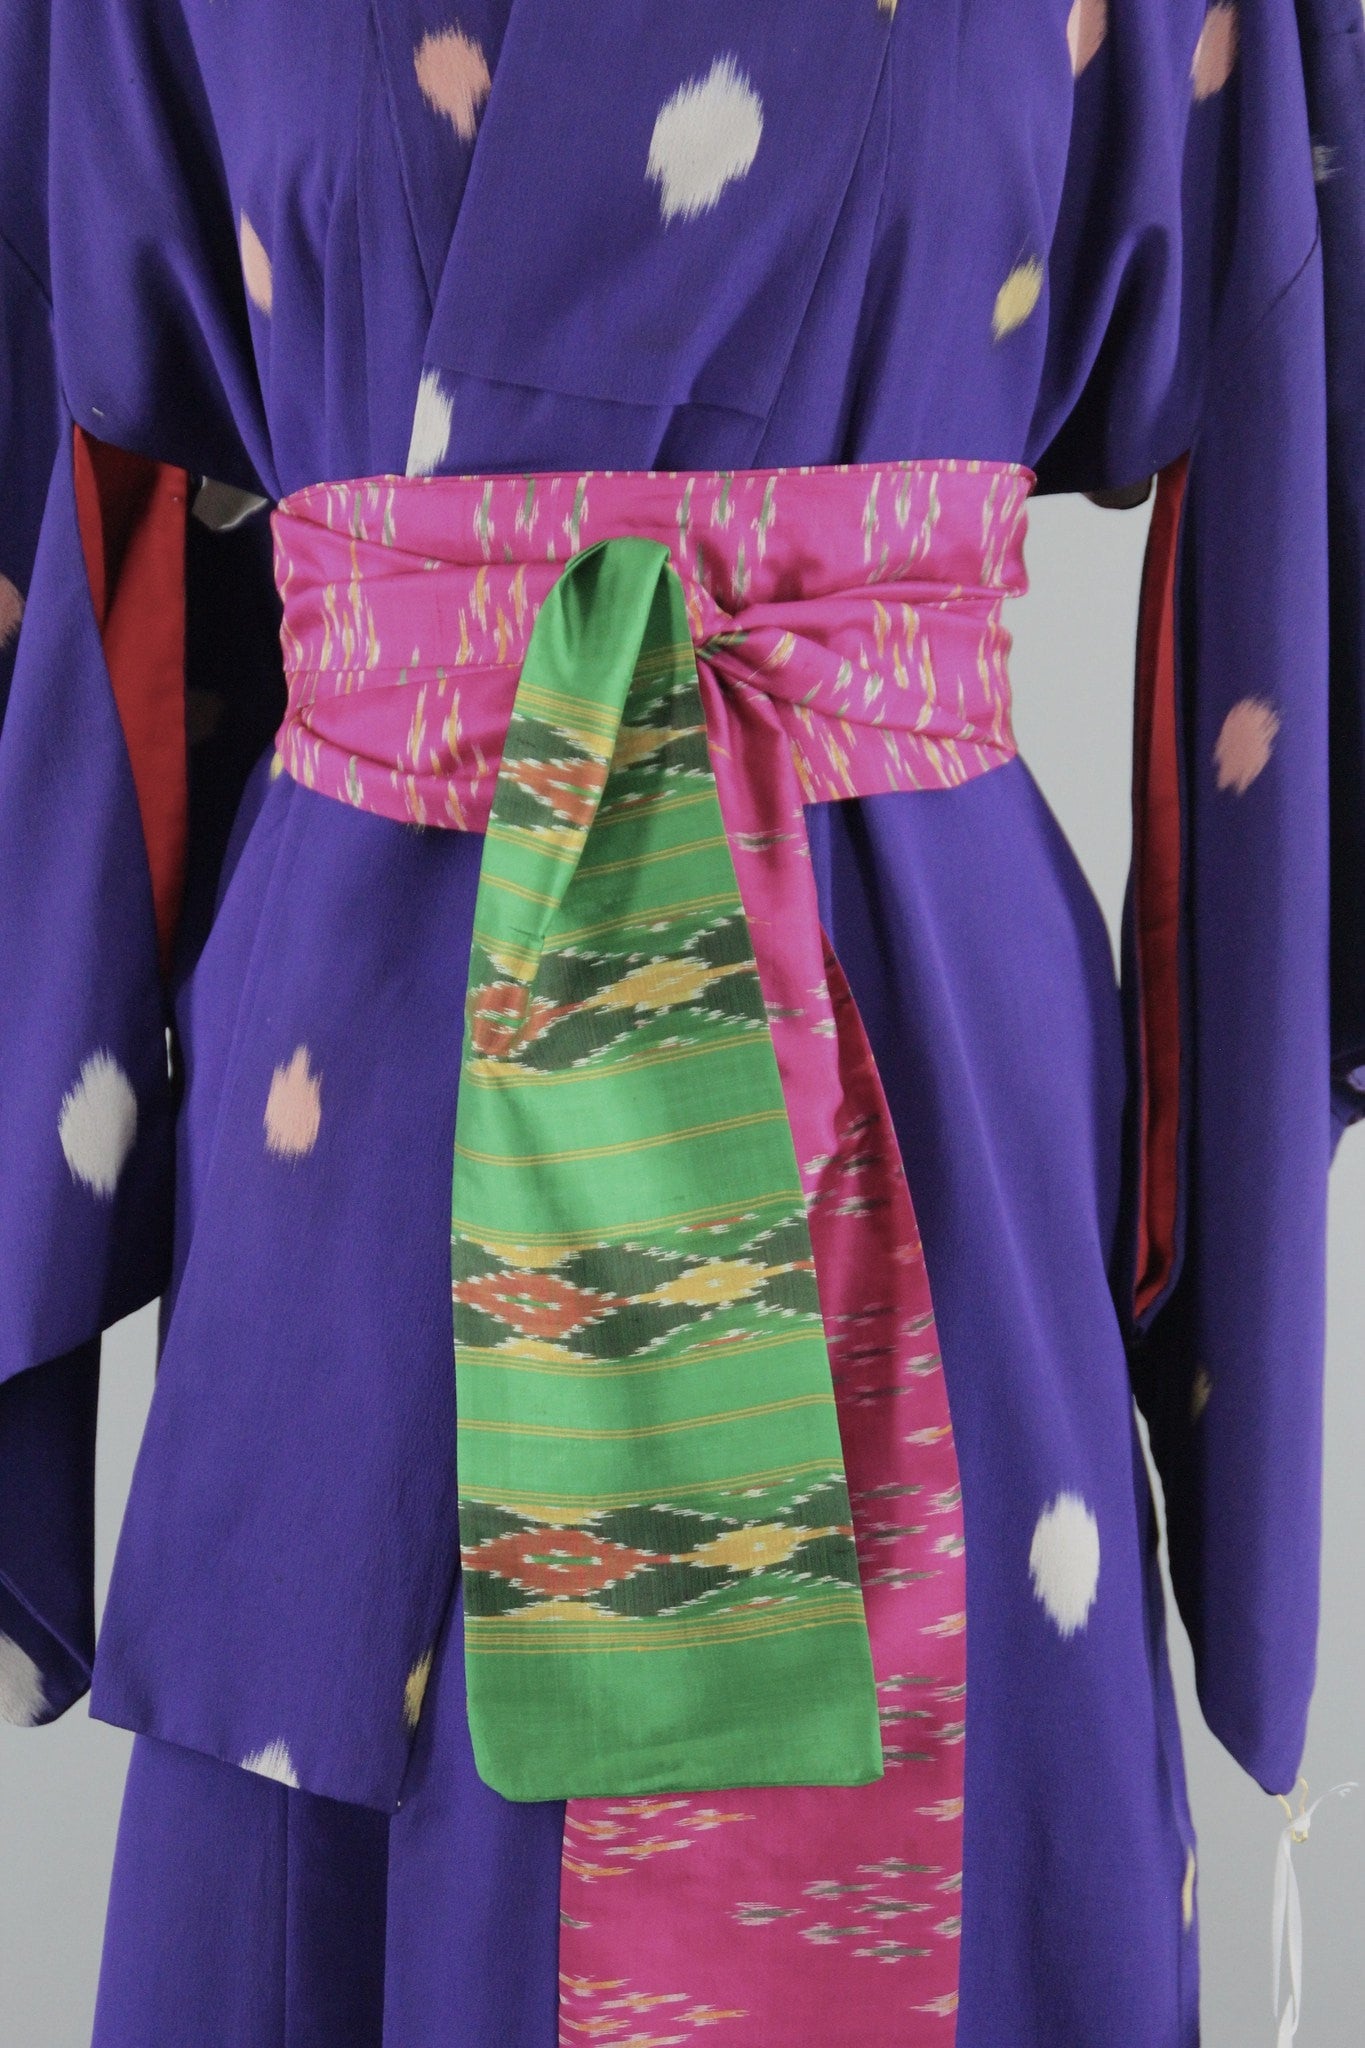 1940s Vintage Silk Kimono Robe in Purple Polka Dots Ikat - ThisBlueBird